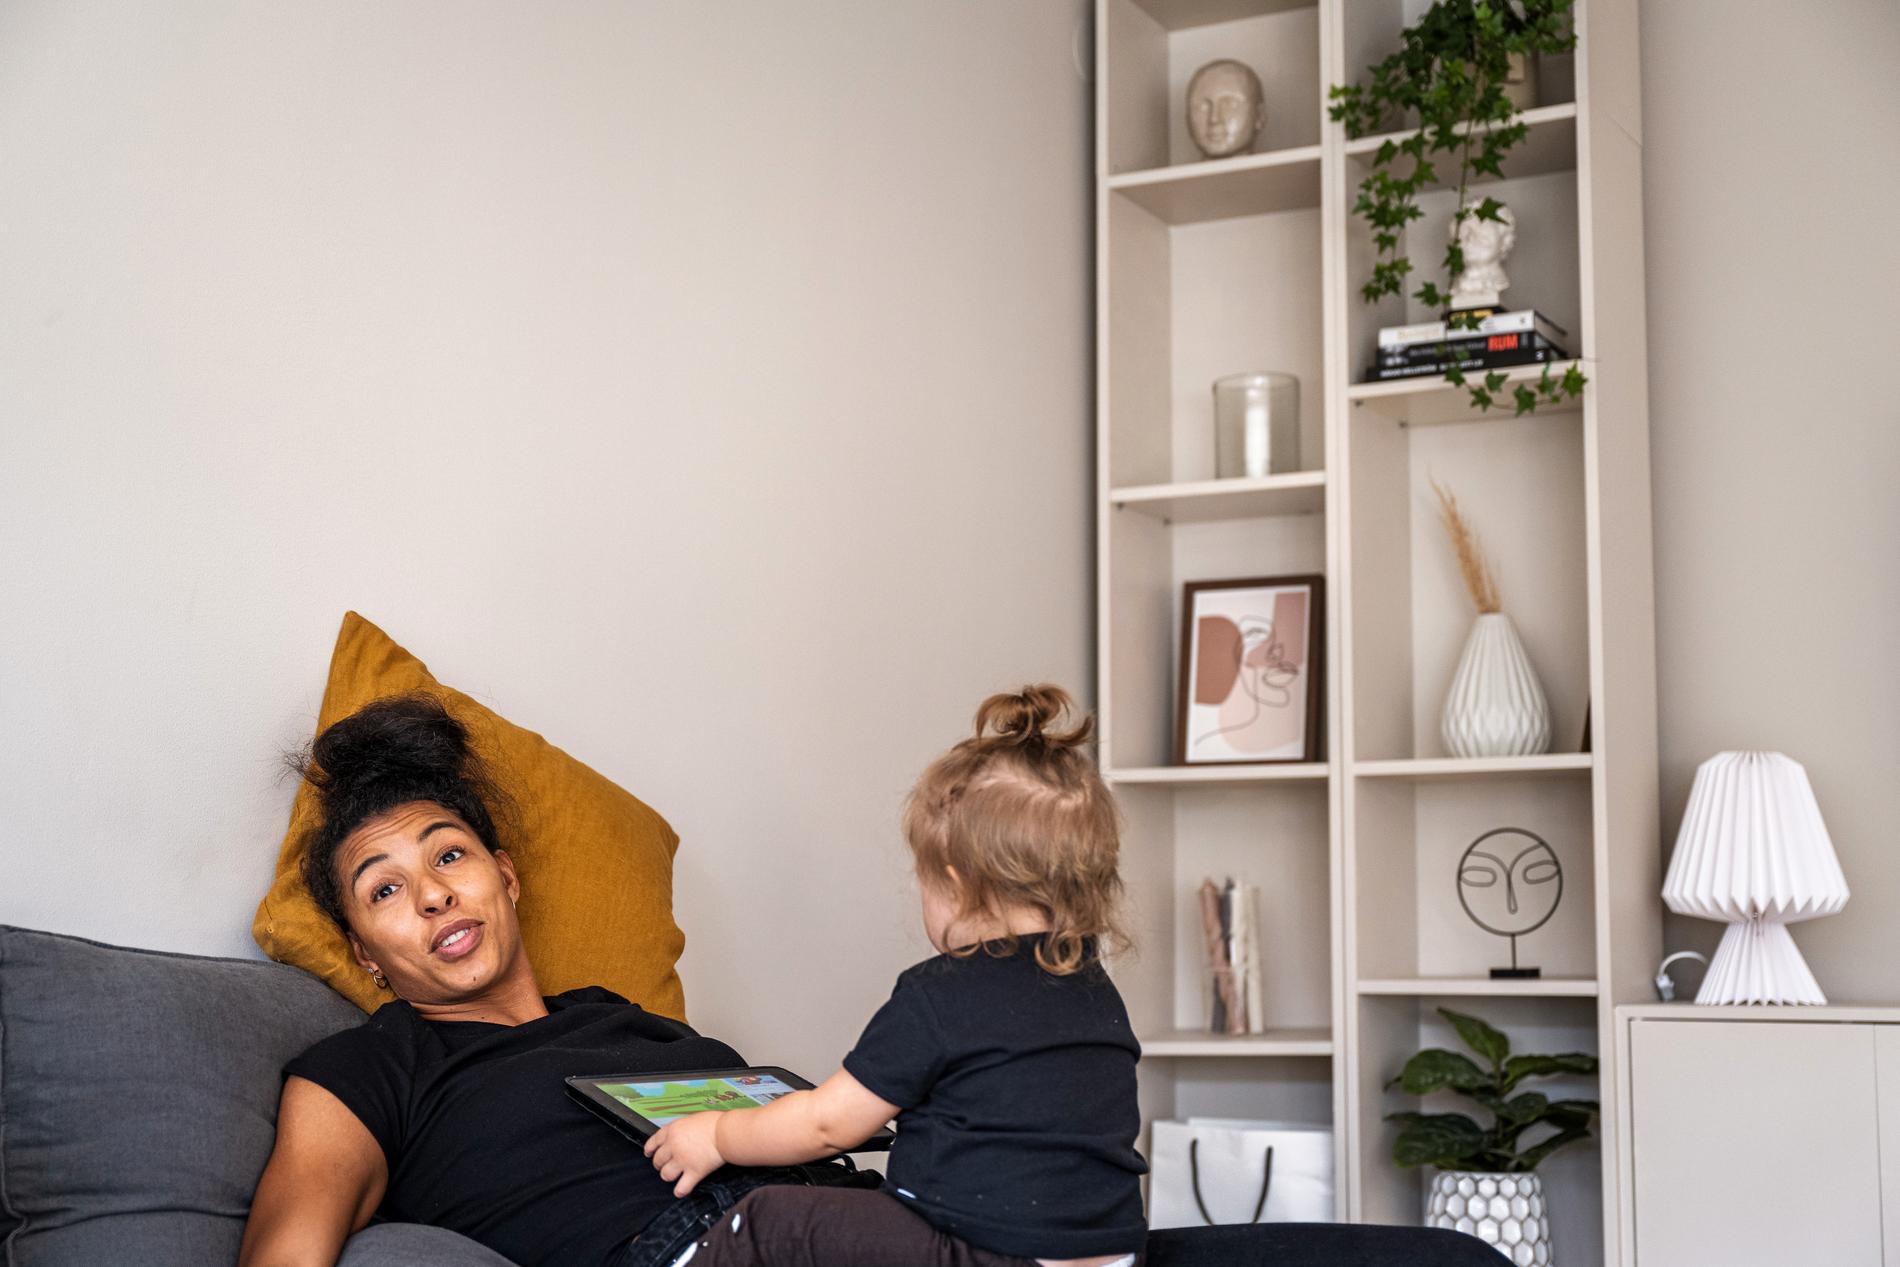 Jamina Roberts med sin dotter under en fotografering i hemmet i Partille 2021.